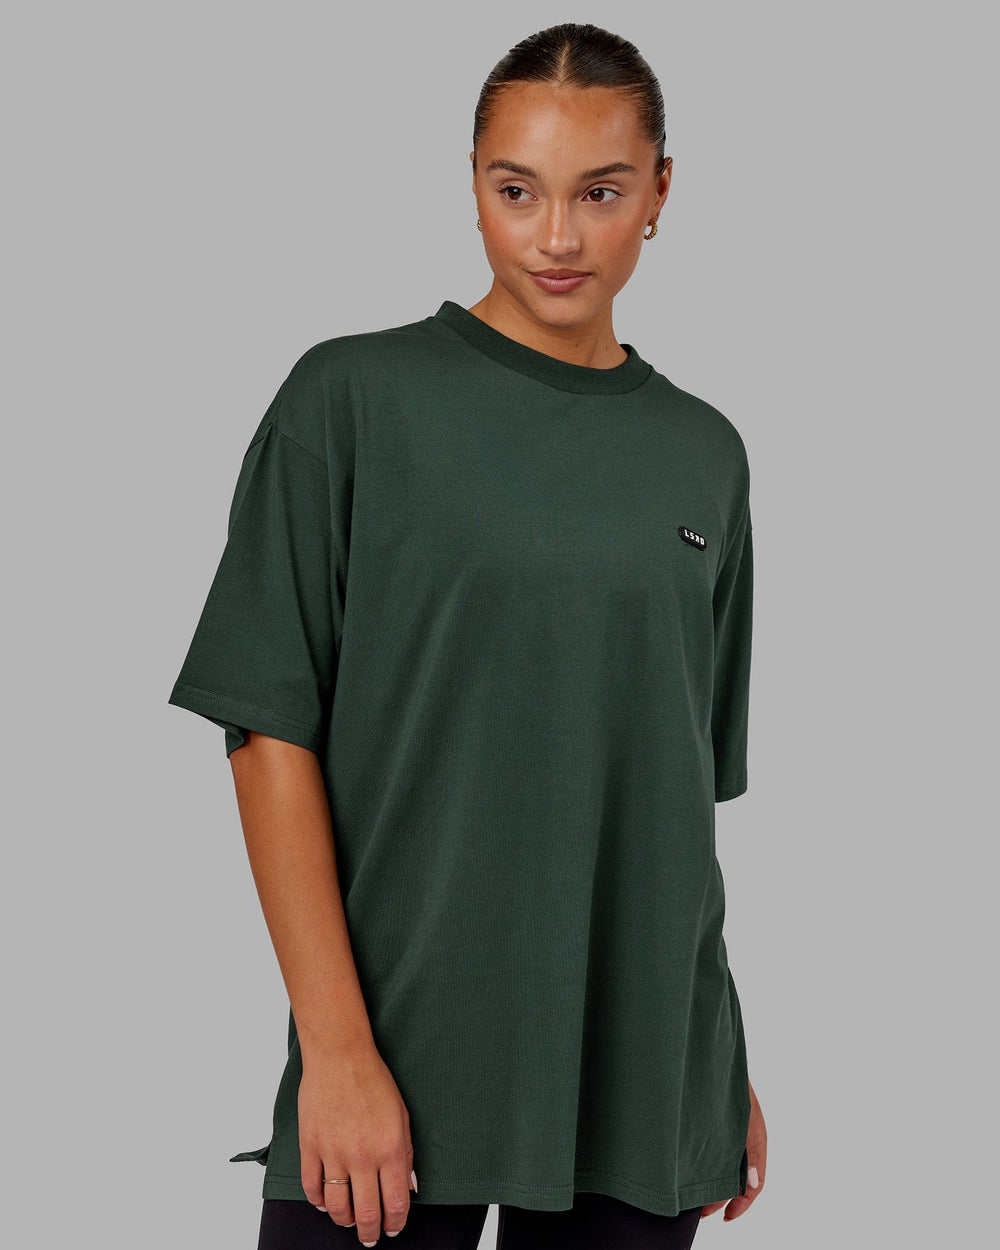 Woman wearing Unisex Capsule FLXCotton Tee Oversize - Vital Green